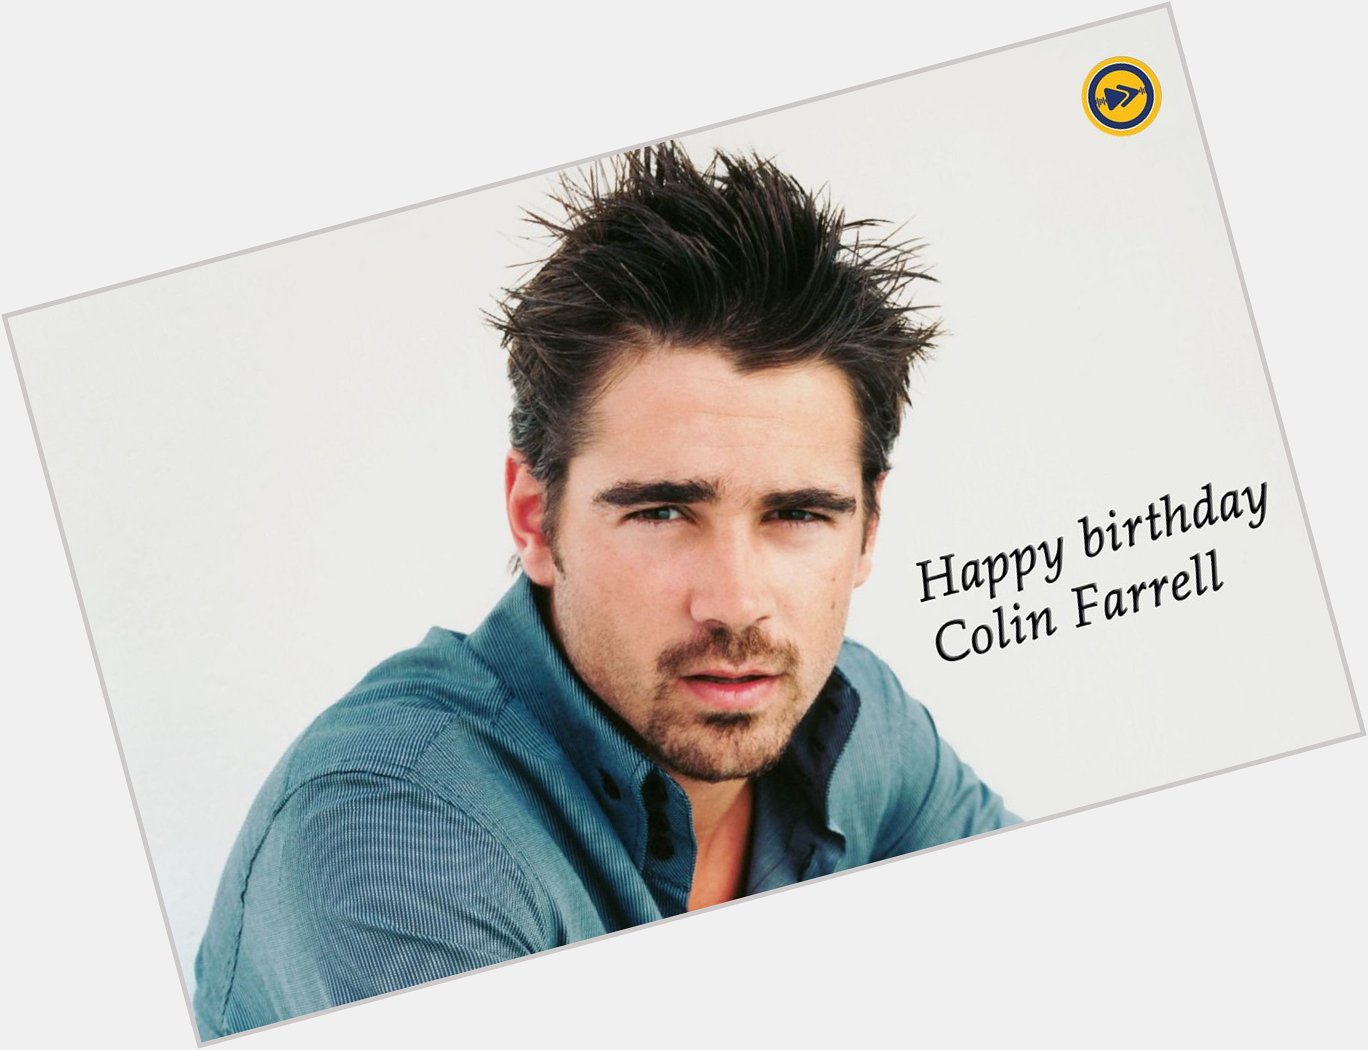 Happy birthday to Colin Farrell 